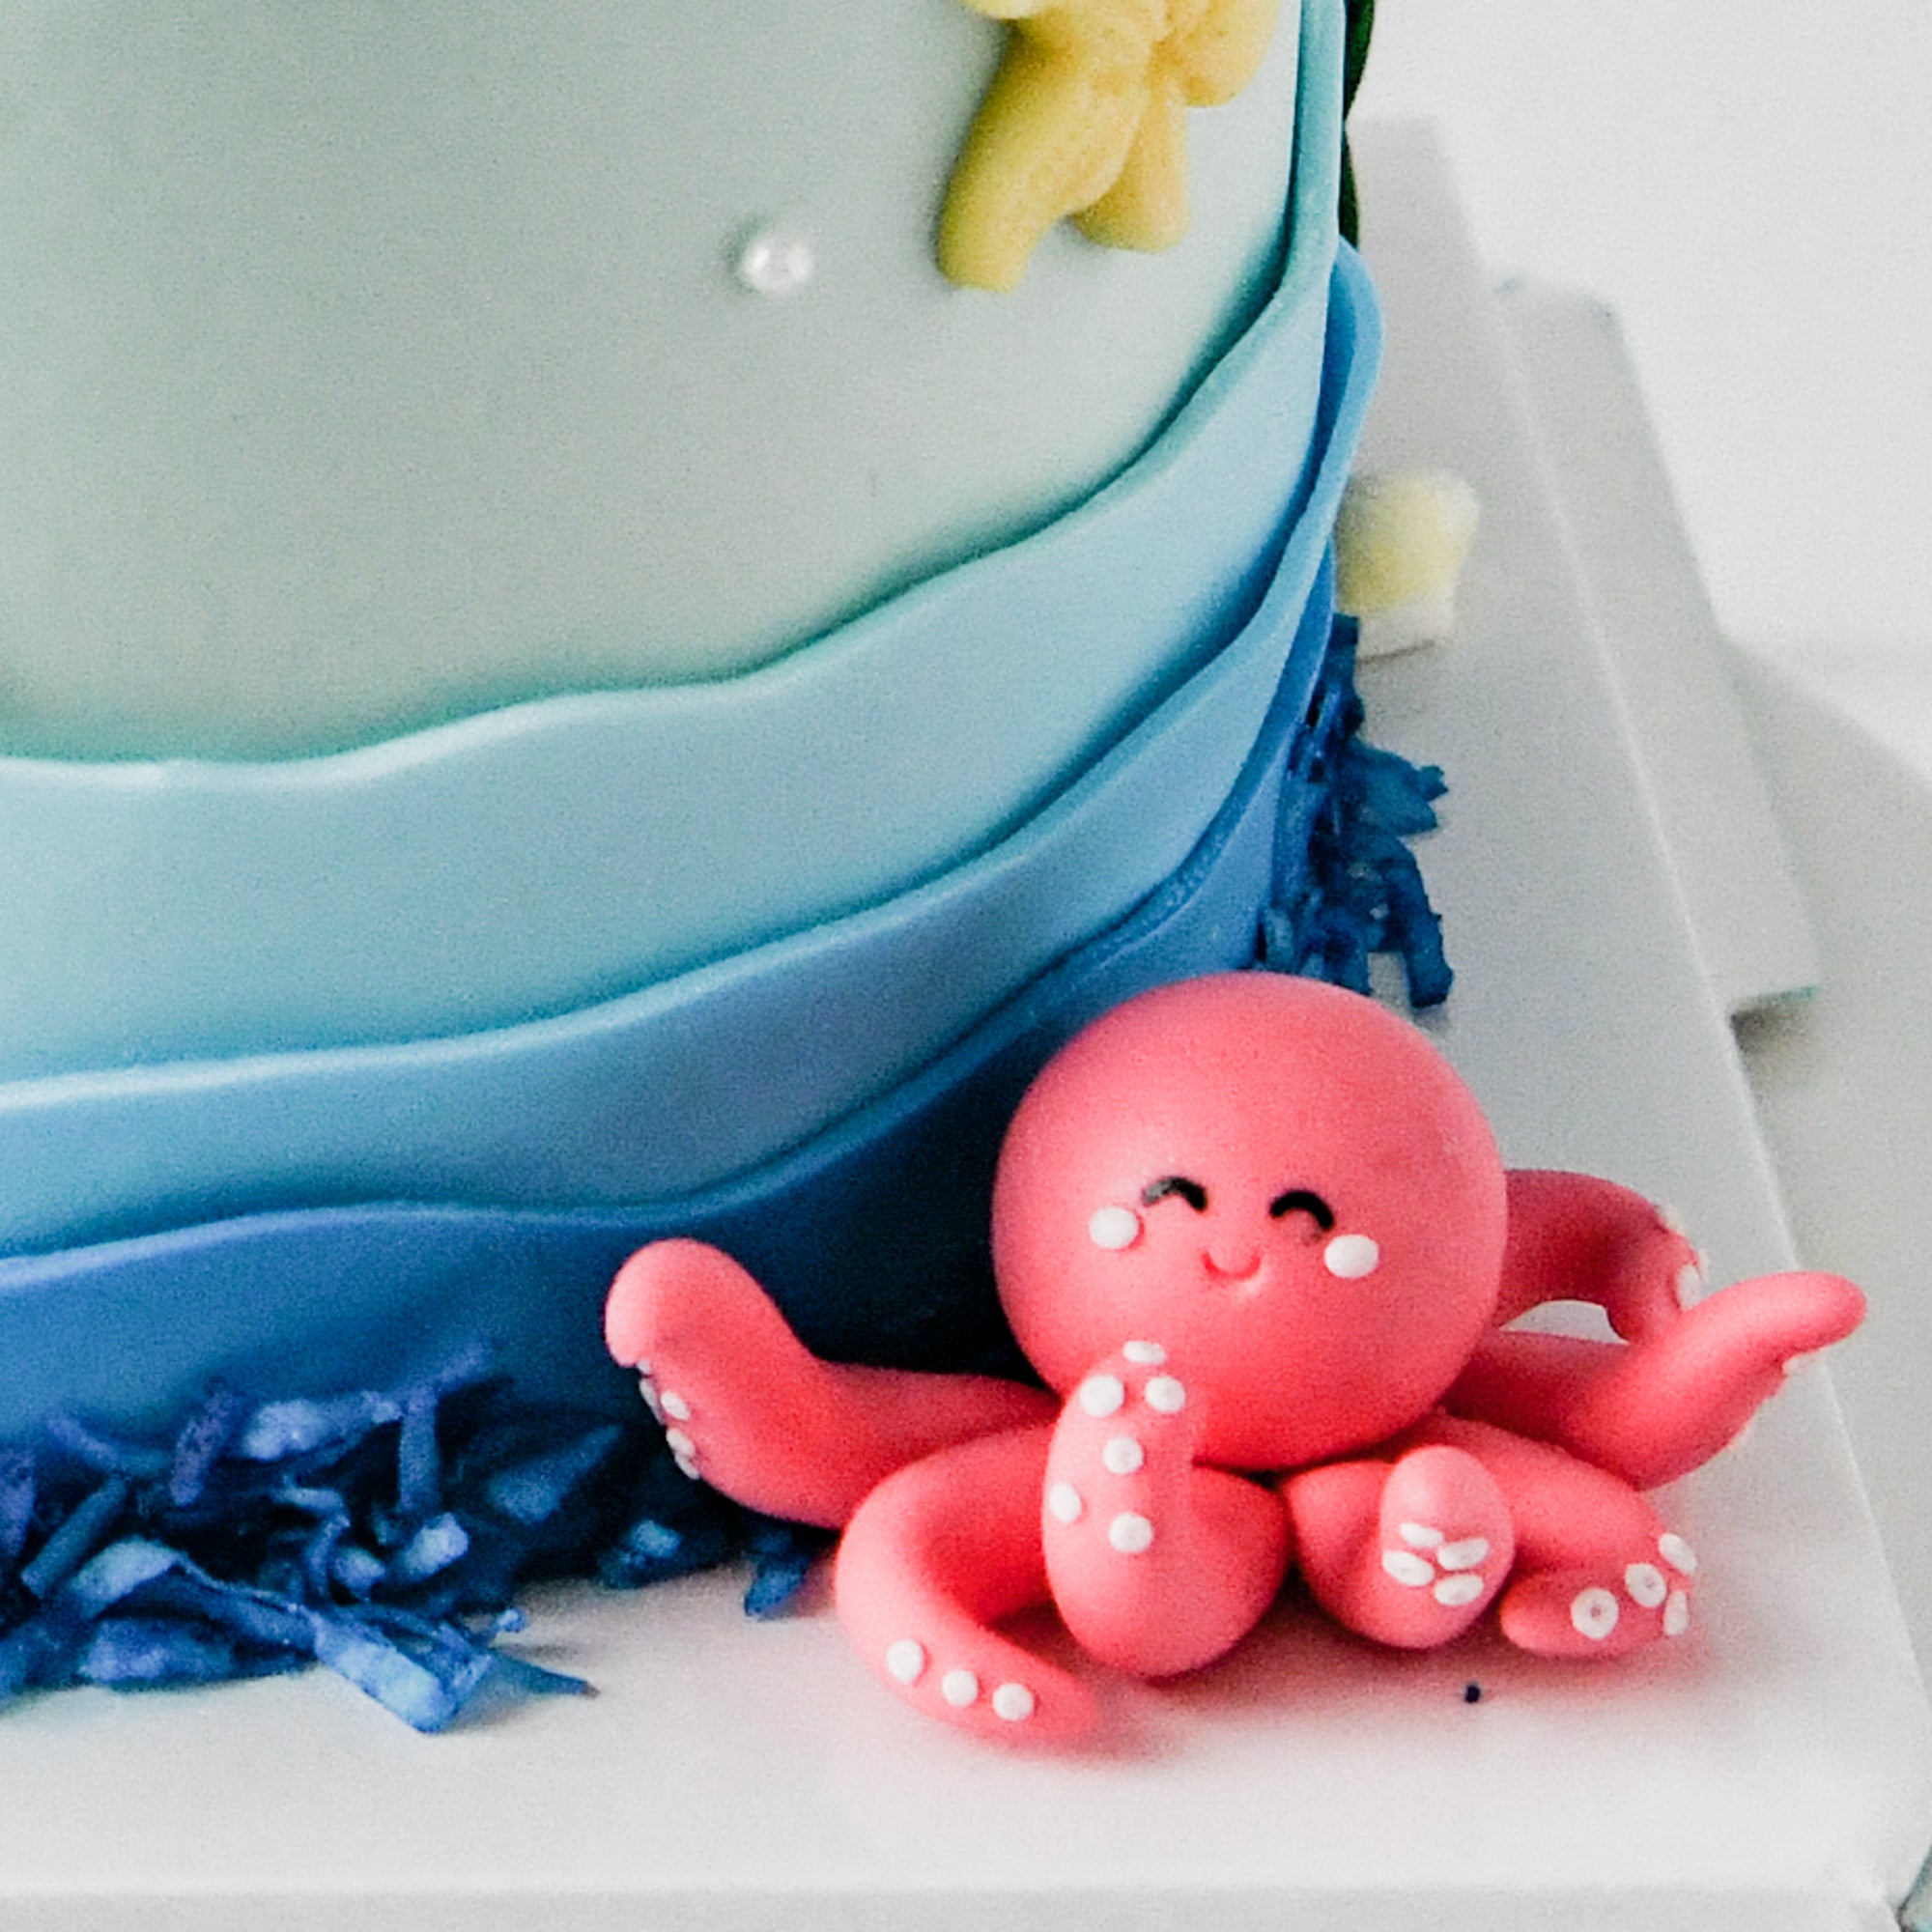 Customized Cake- Little Boy Sea Theme Cake – Annabella Patisserie Macarons